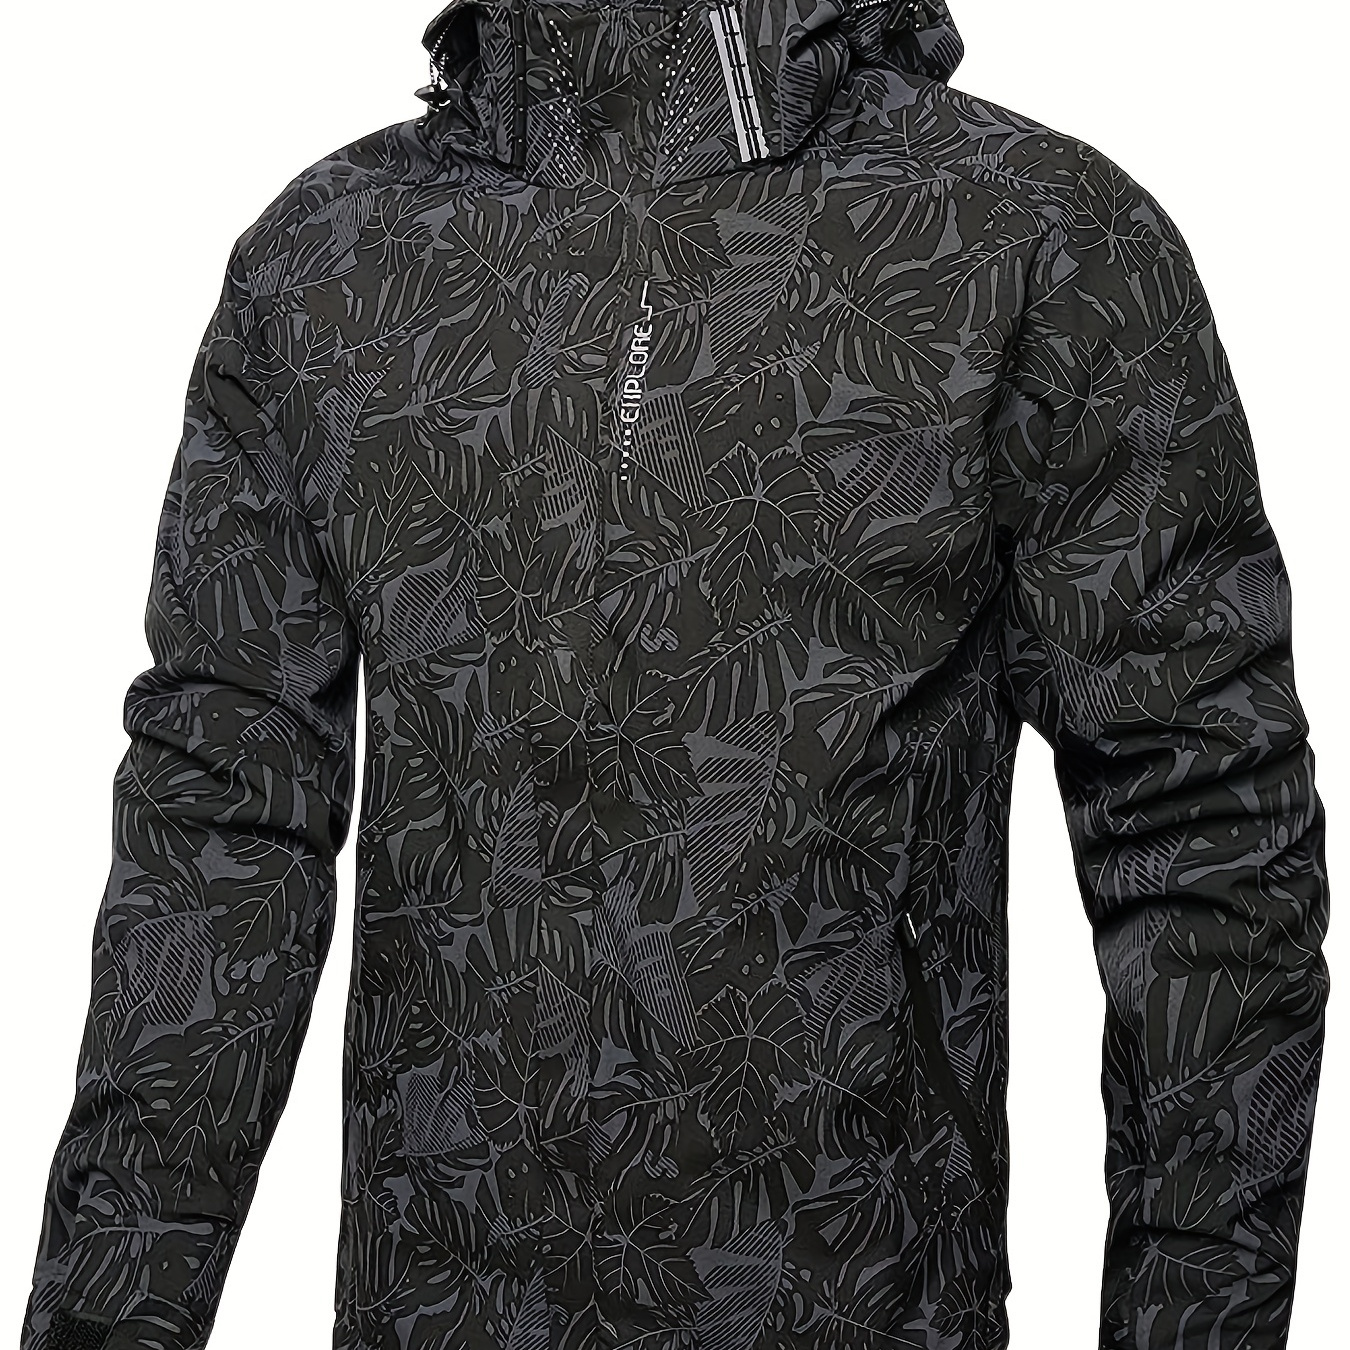 

Men's Casual Lightweight Waterproof Windbreaker Jacket, Full Zip Up Hooded Shell Outdoor Hiking Coat For Autumn And Winter